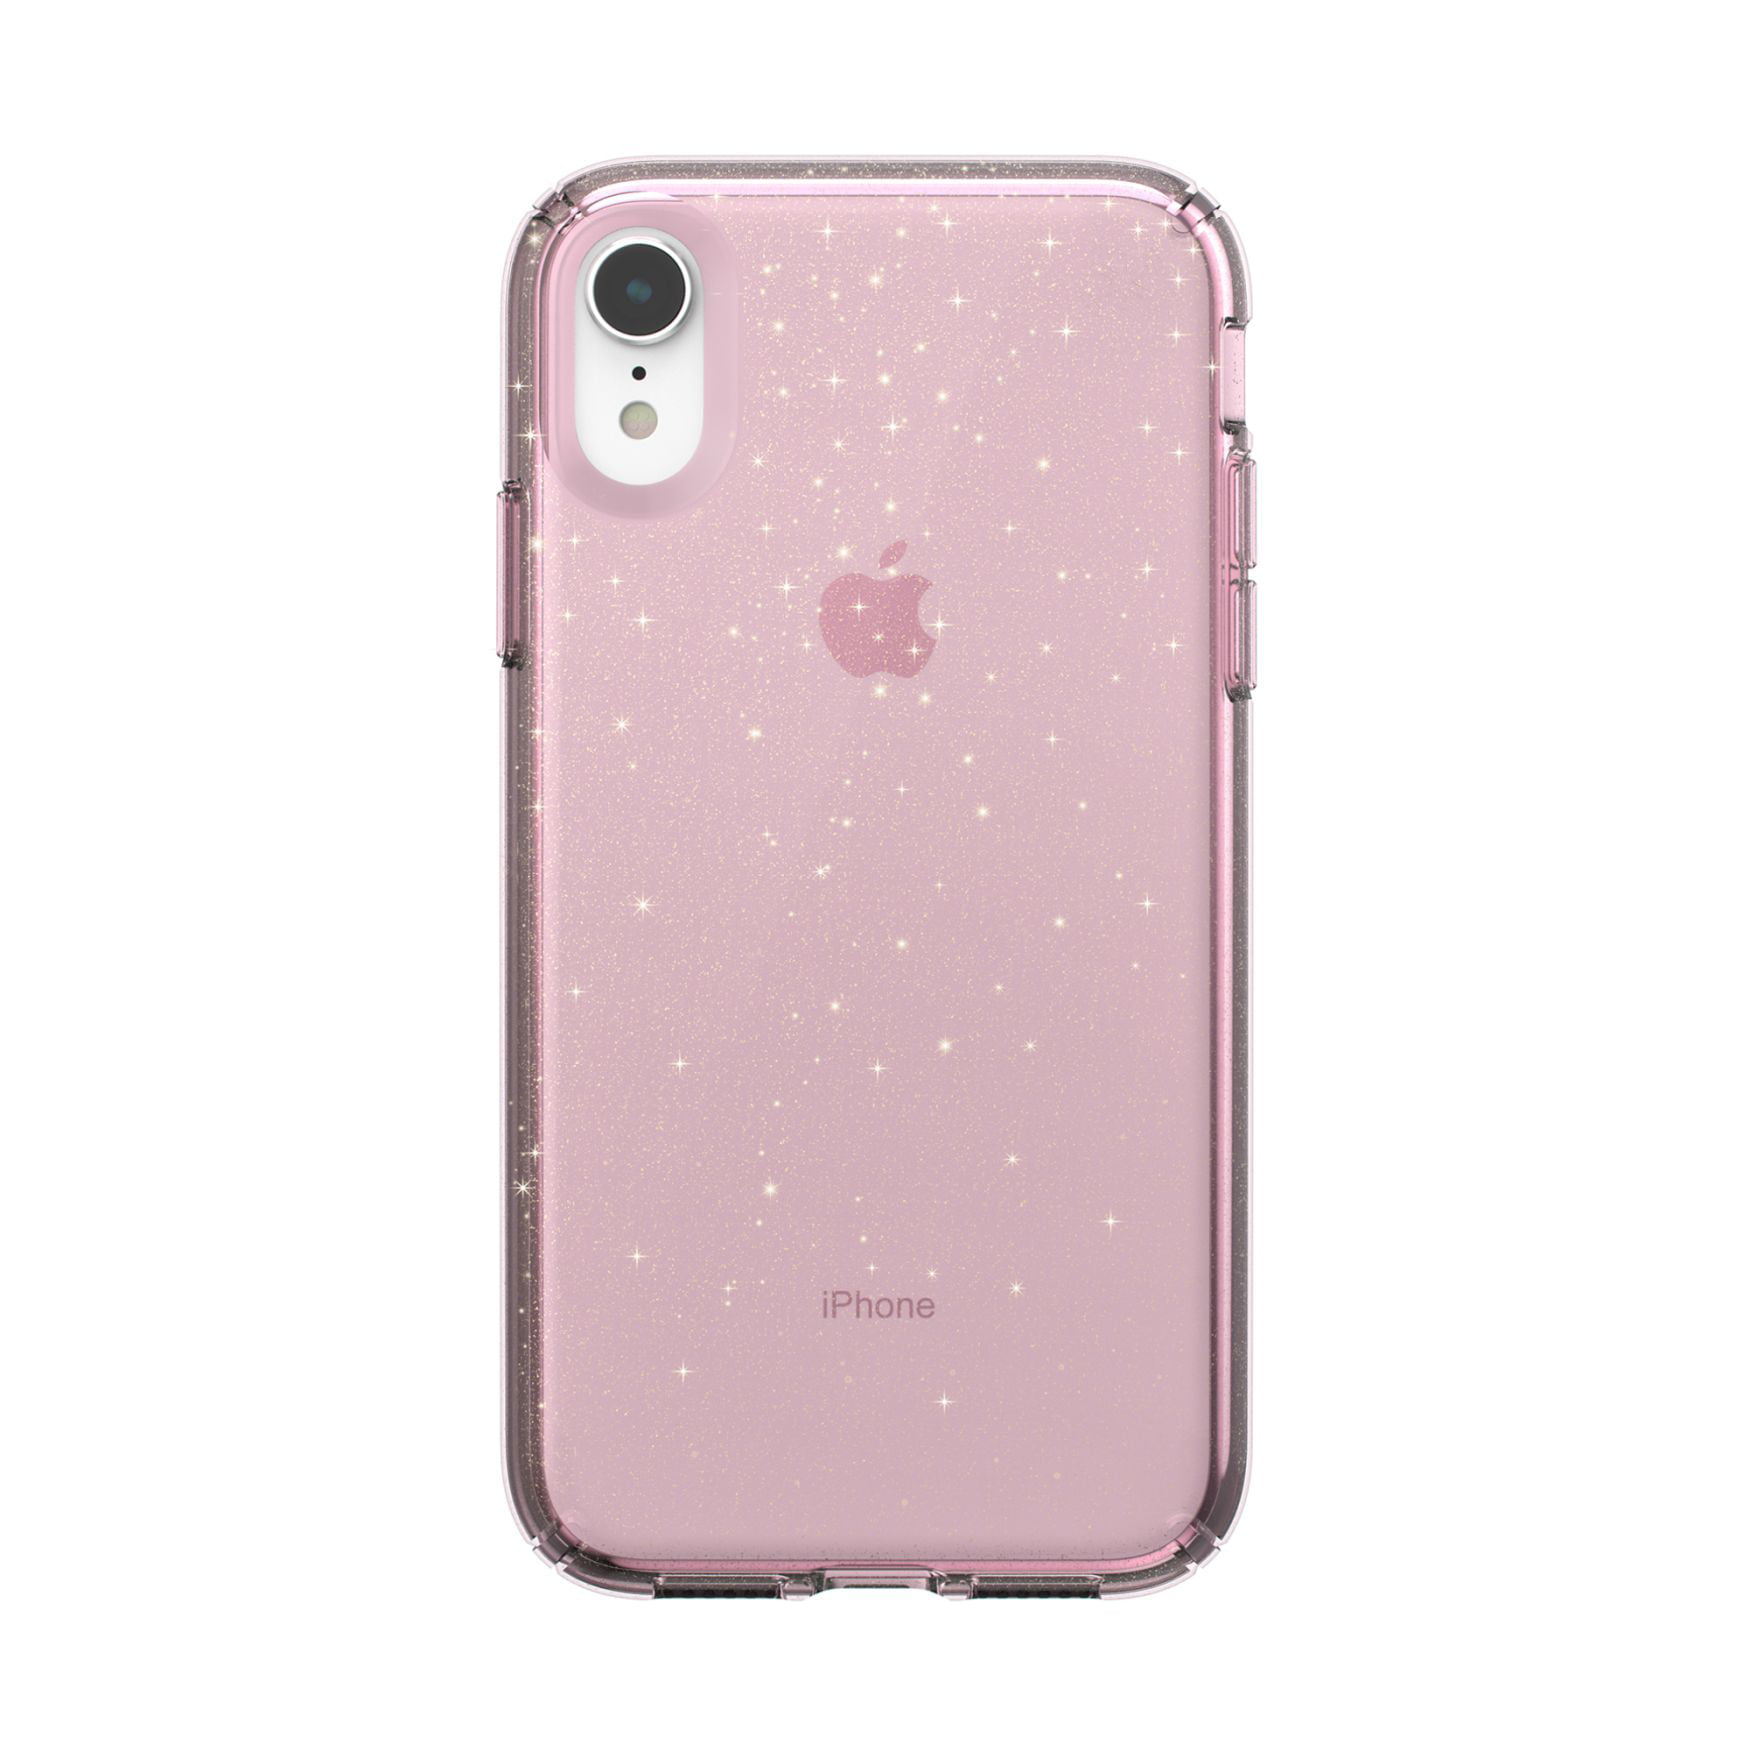 Телефон айфон розовый. Case iphone XS Max розовый. Чехол iphone XS Max Speck. Speck iphone XR. Iphone XS розовый.